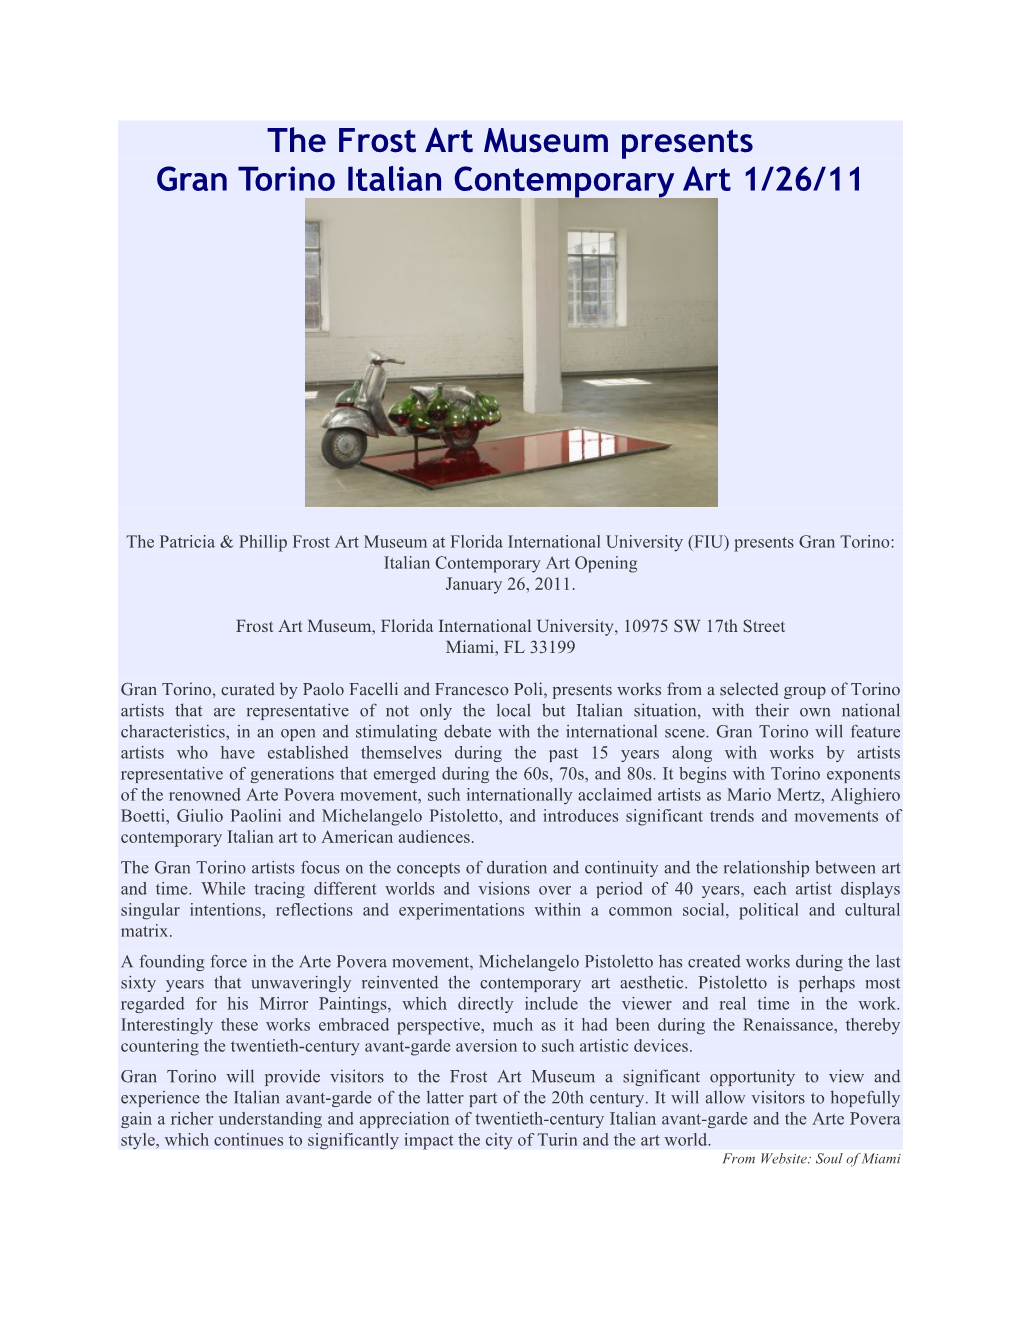 The Frost Art Museum Presents Gran Torino Italian Contemporary Art 1/26/11